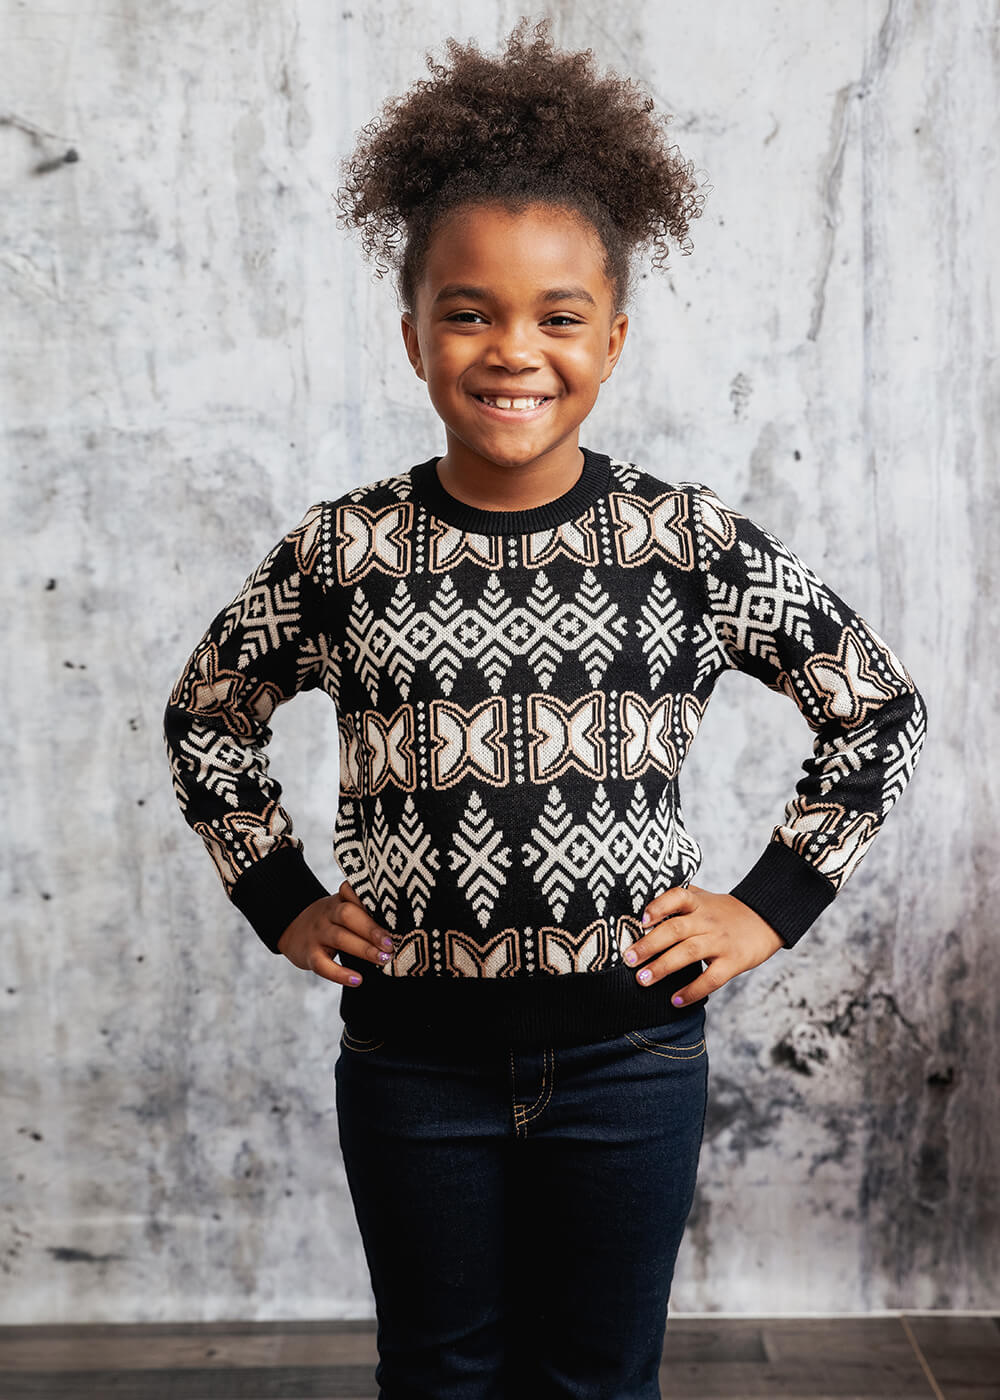 Oma Kid's African Print Sweater (Black Tan Batik) - Clearance